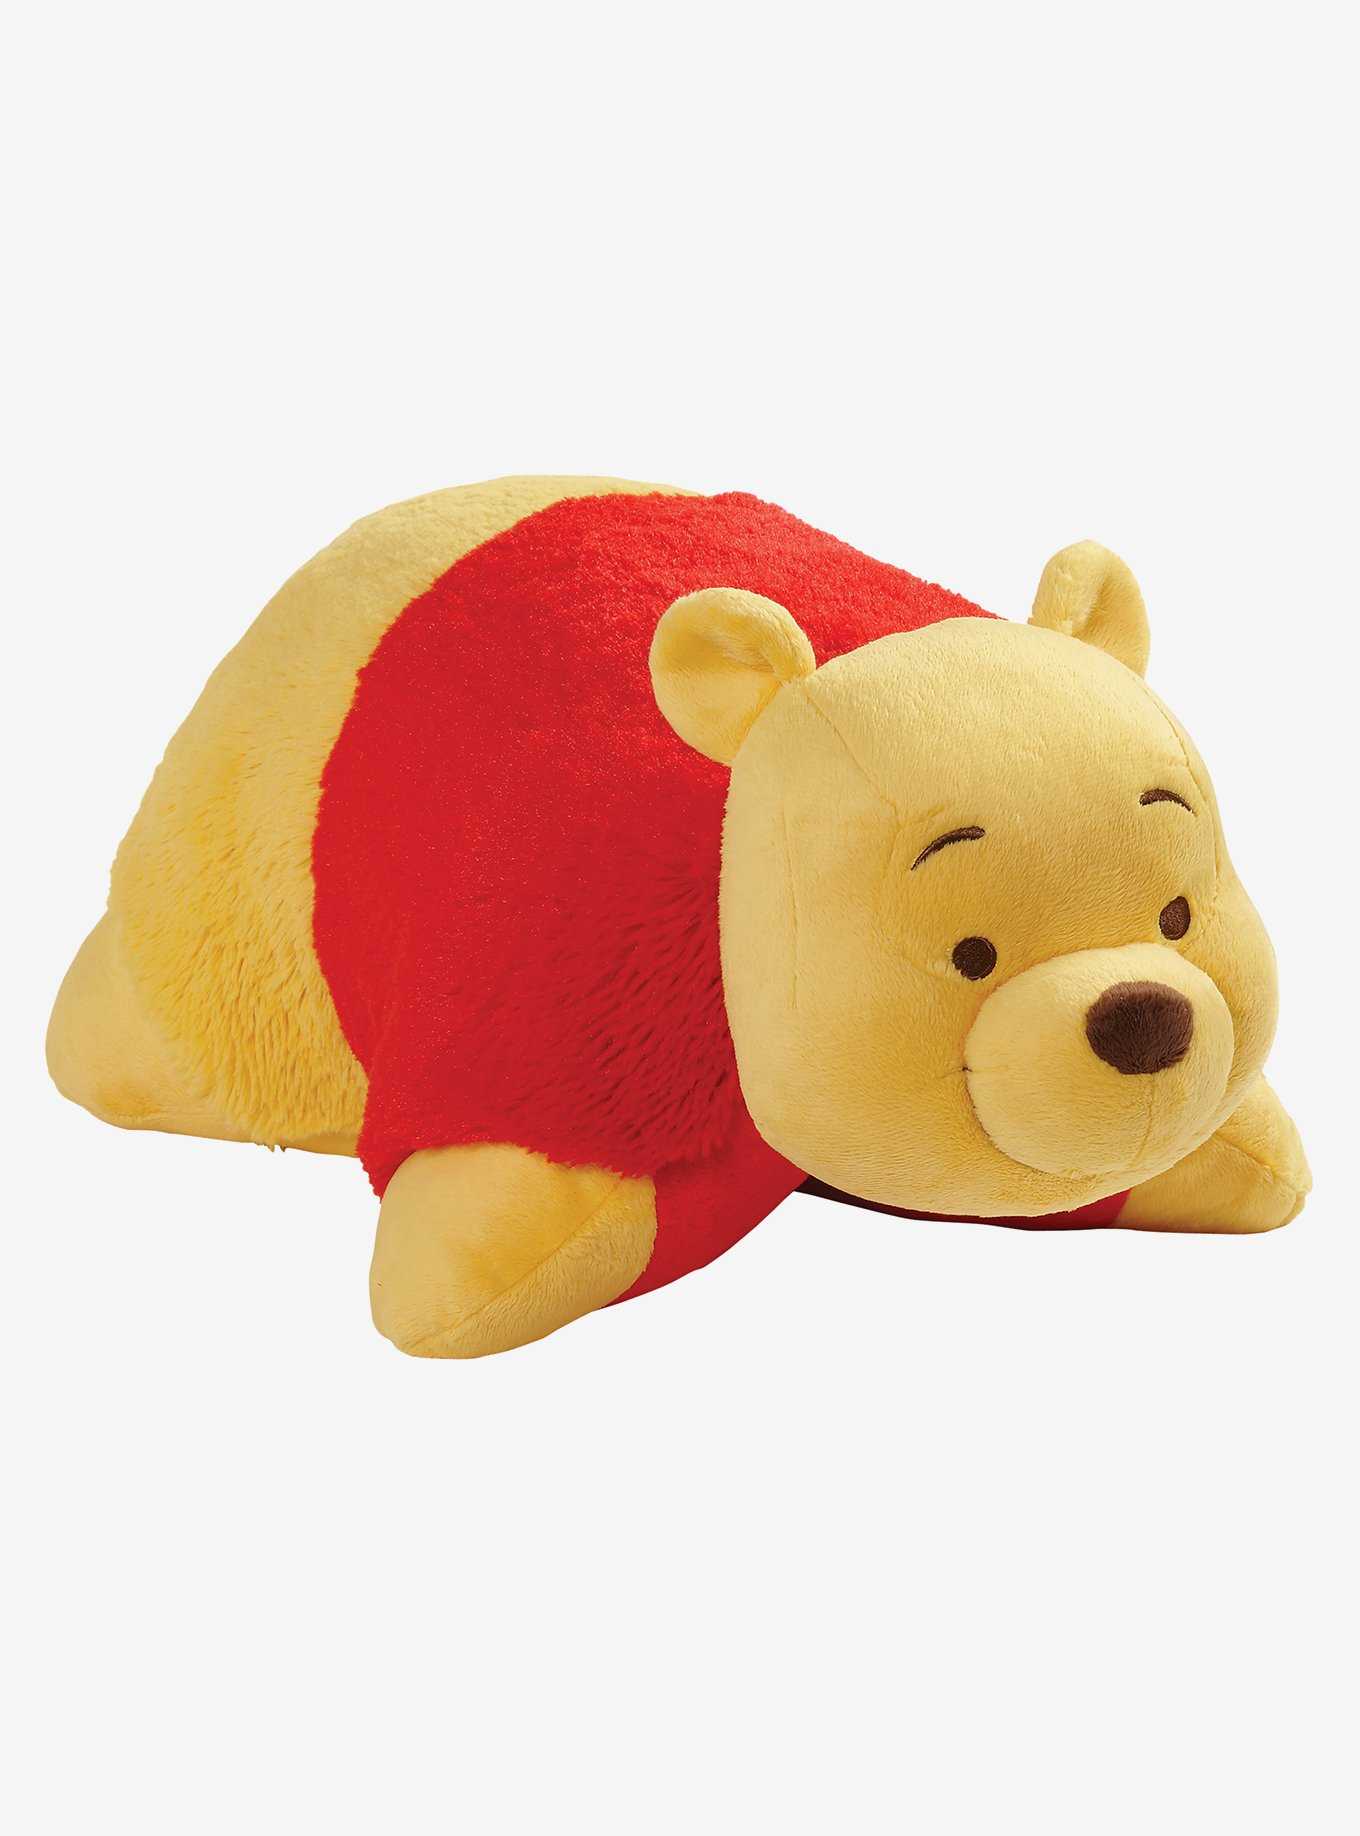 Disney Winnie The Pooh Pillow Pets Plush Toy, , hi-res